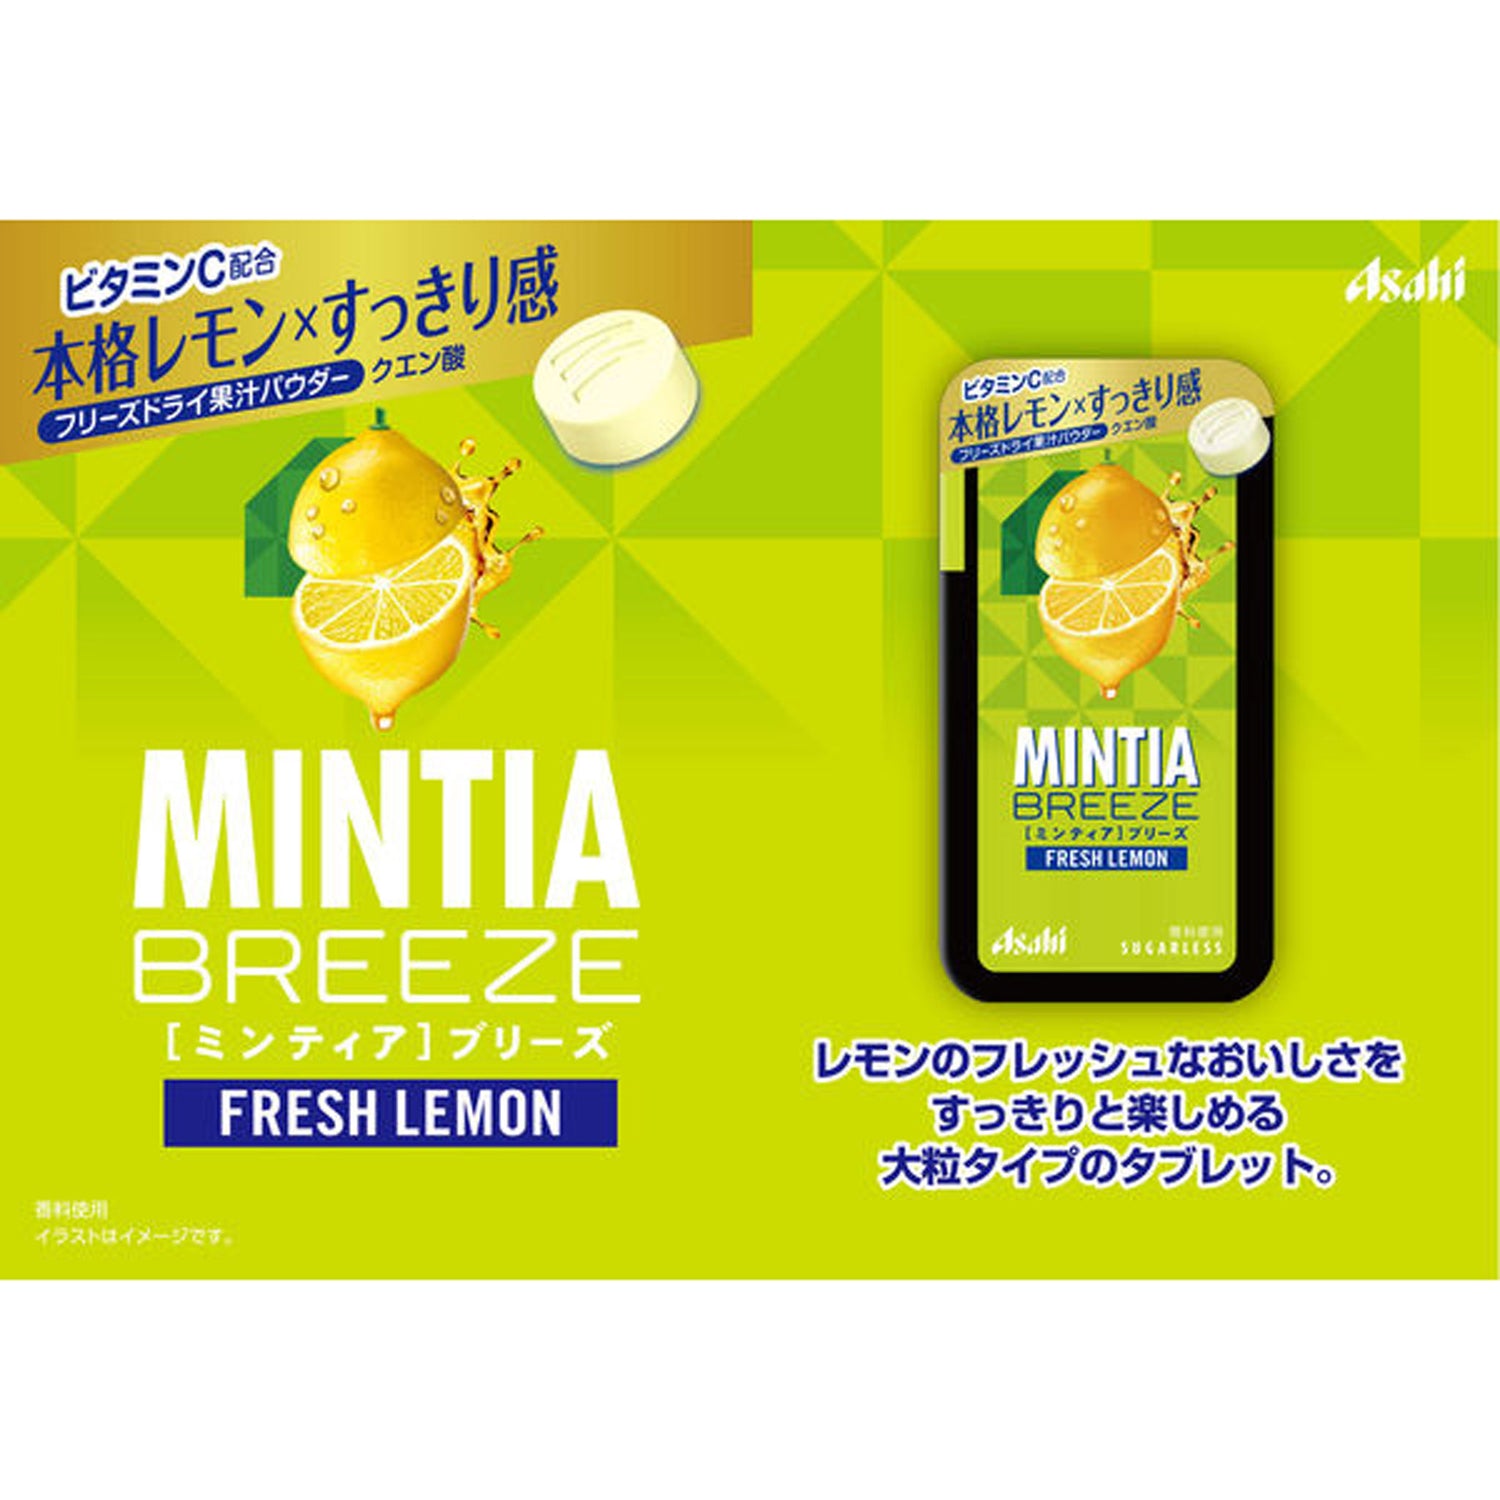 ASAHI Mintia Breeze Fresh Lemon